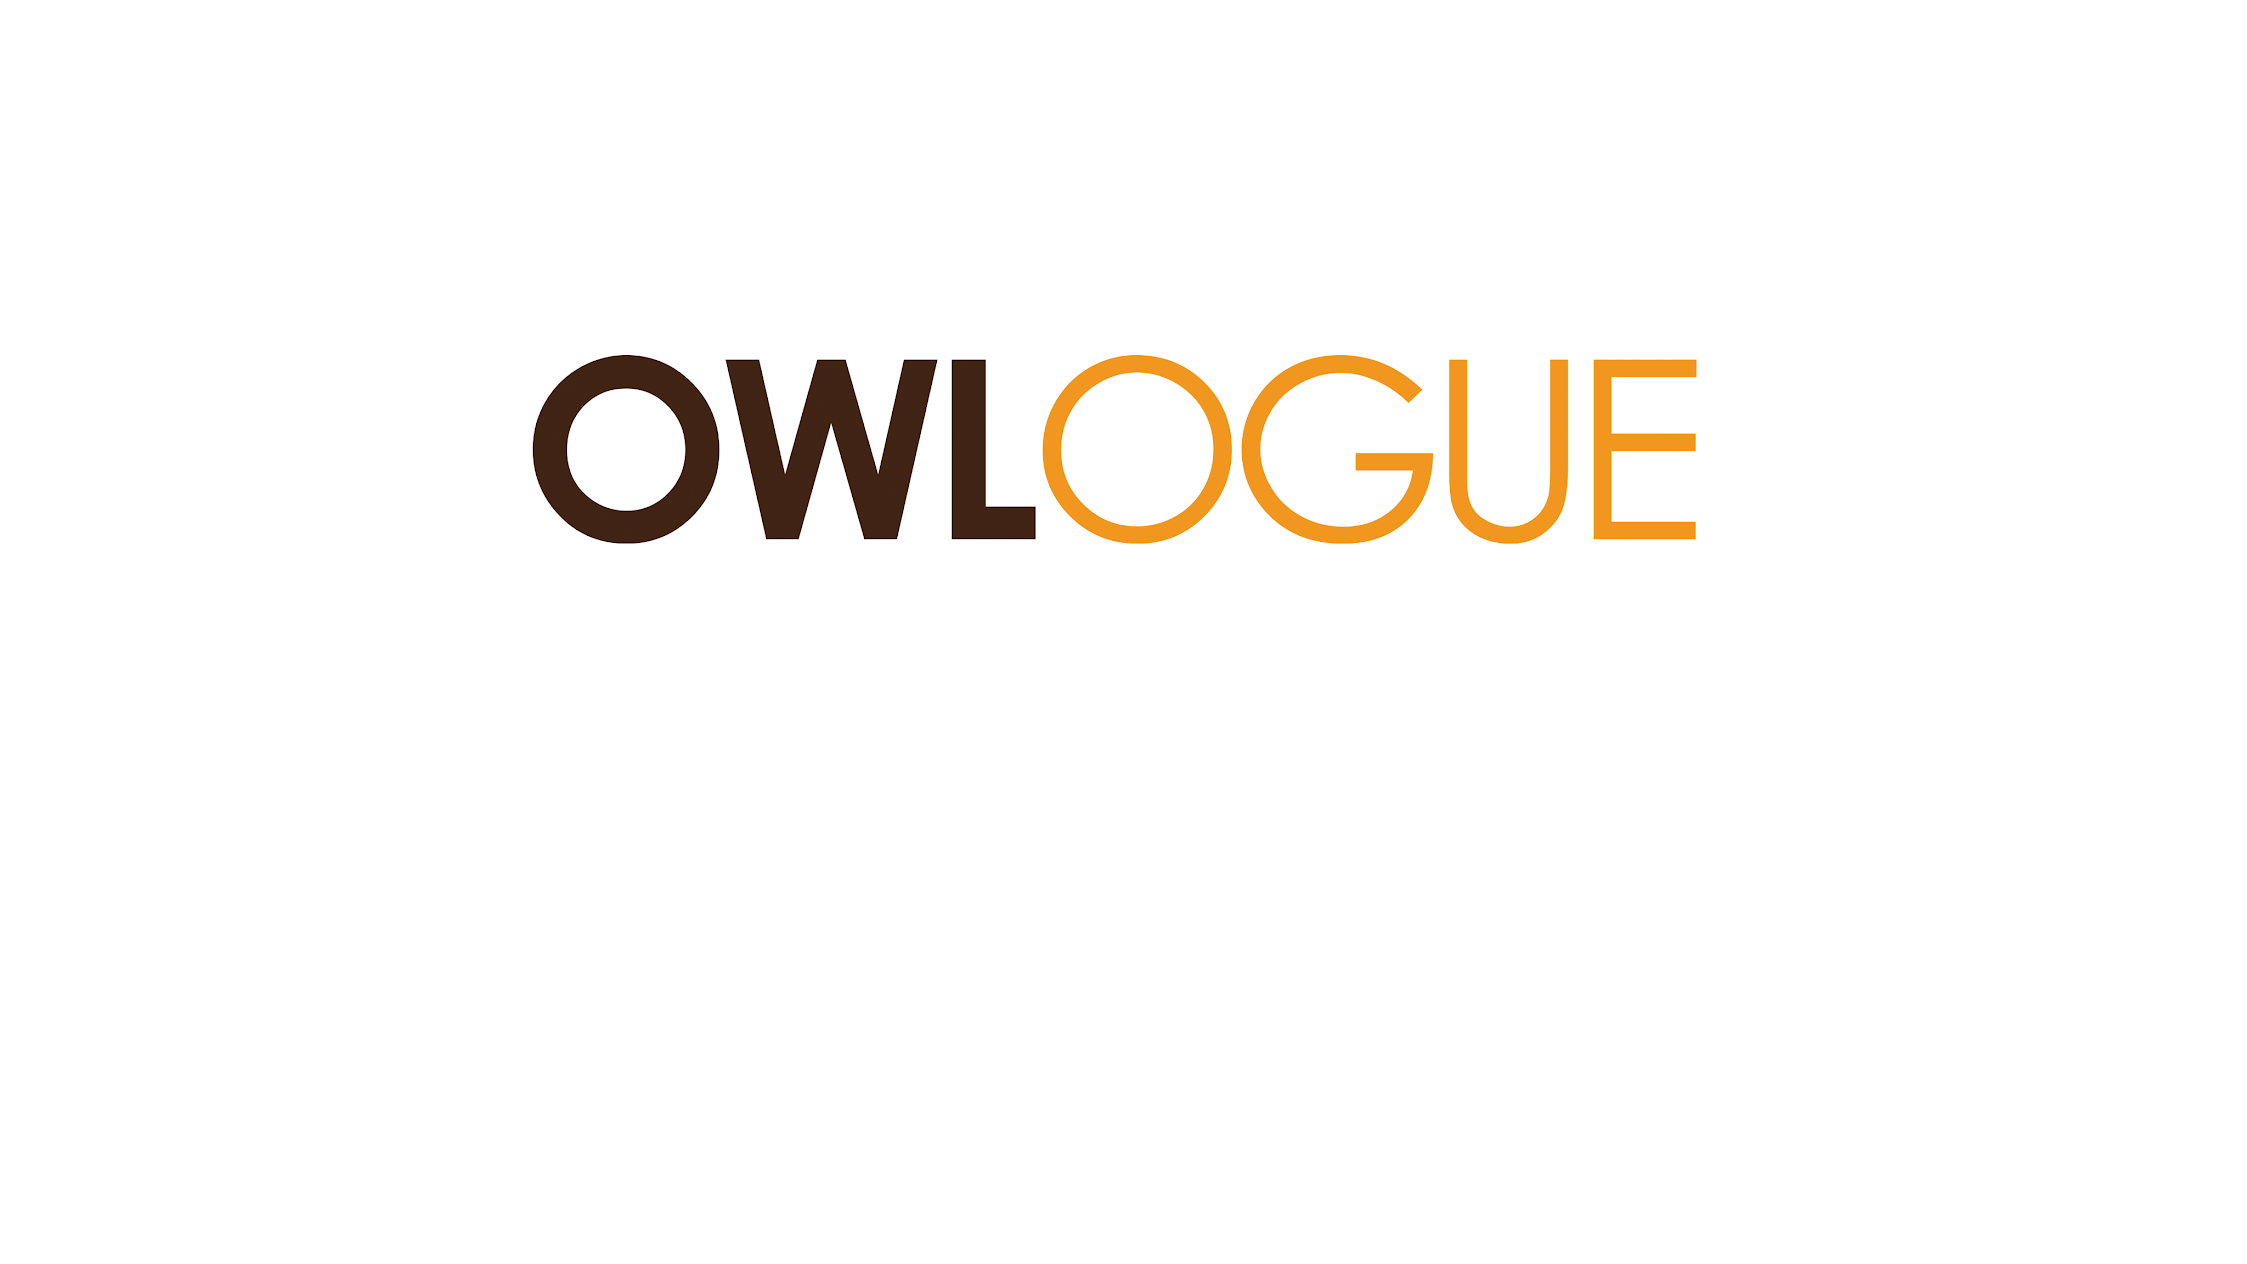 OWLOGUE Co., Ltd.